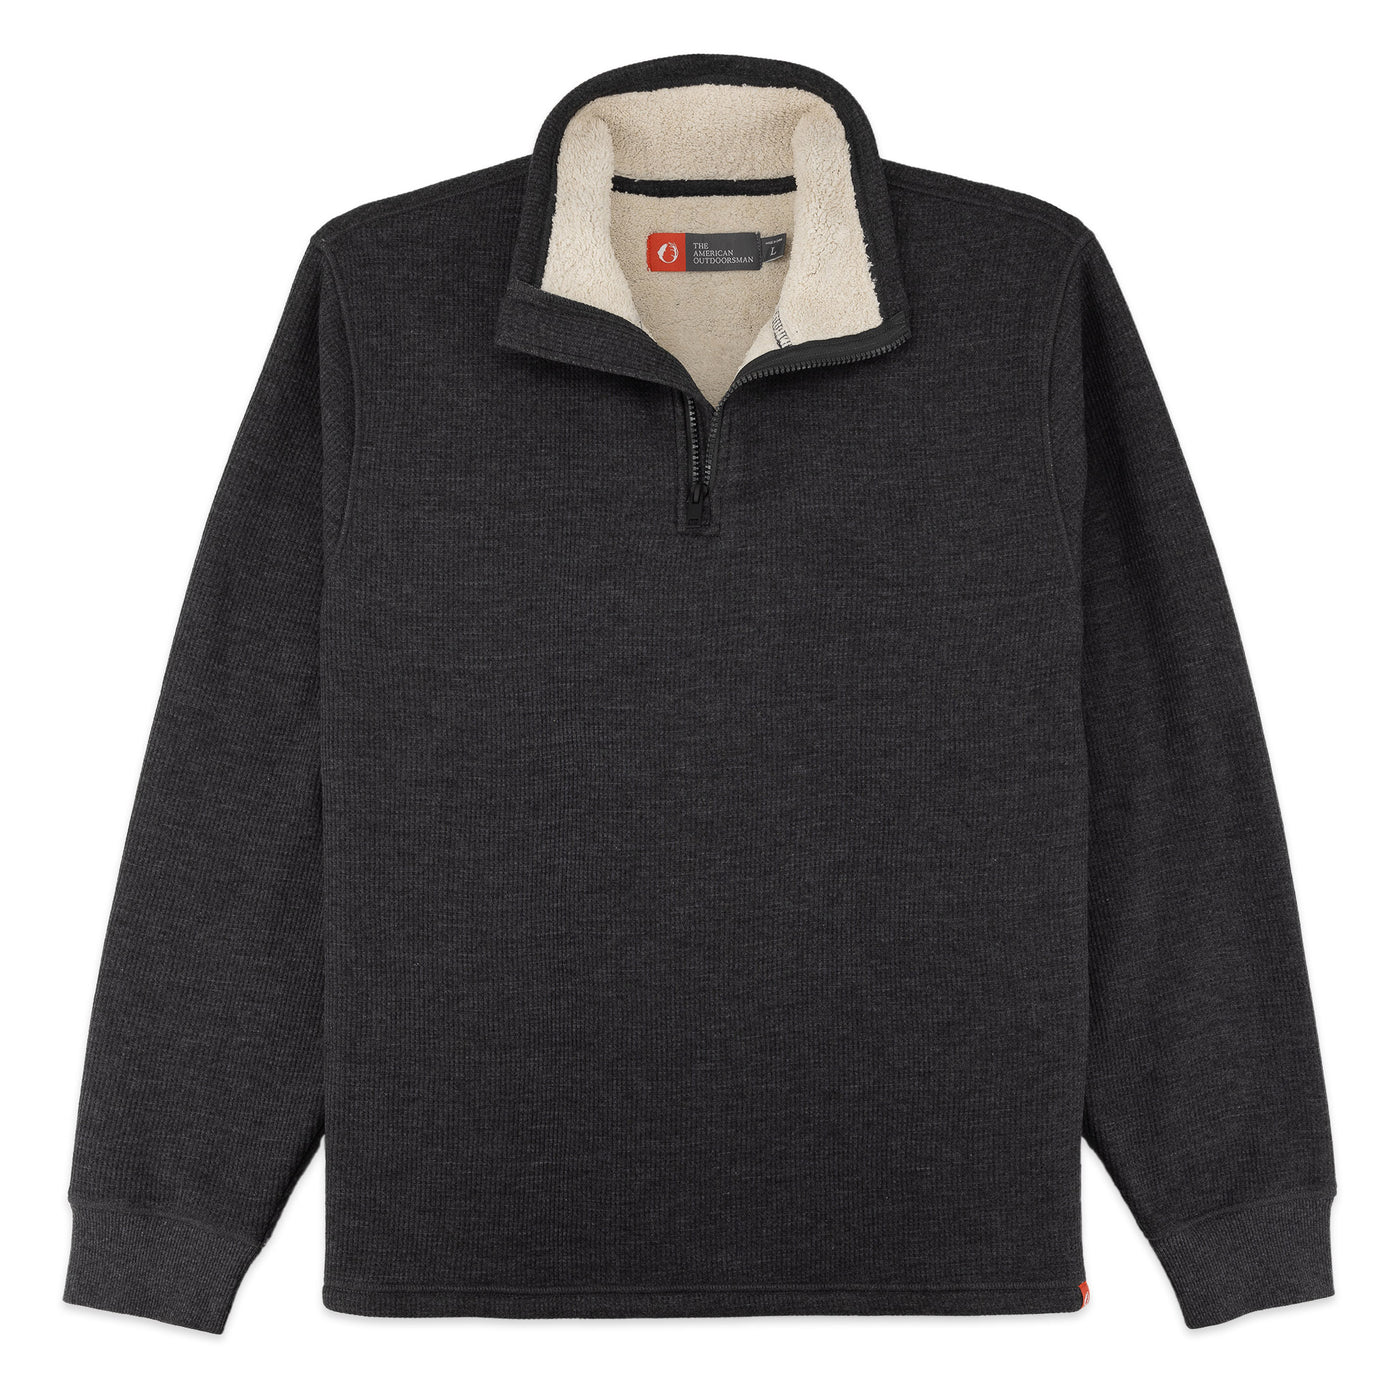 Vintage 1990s Patterned Fleece Quarter Zip Sweater / Outdoorsman